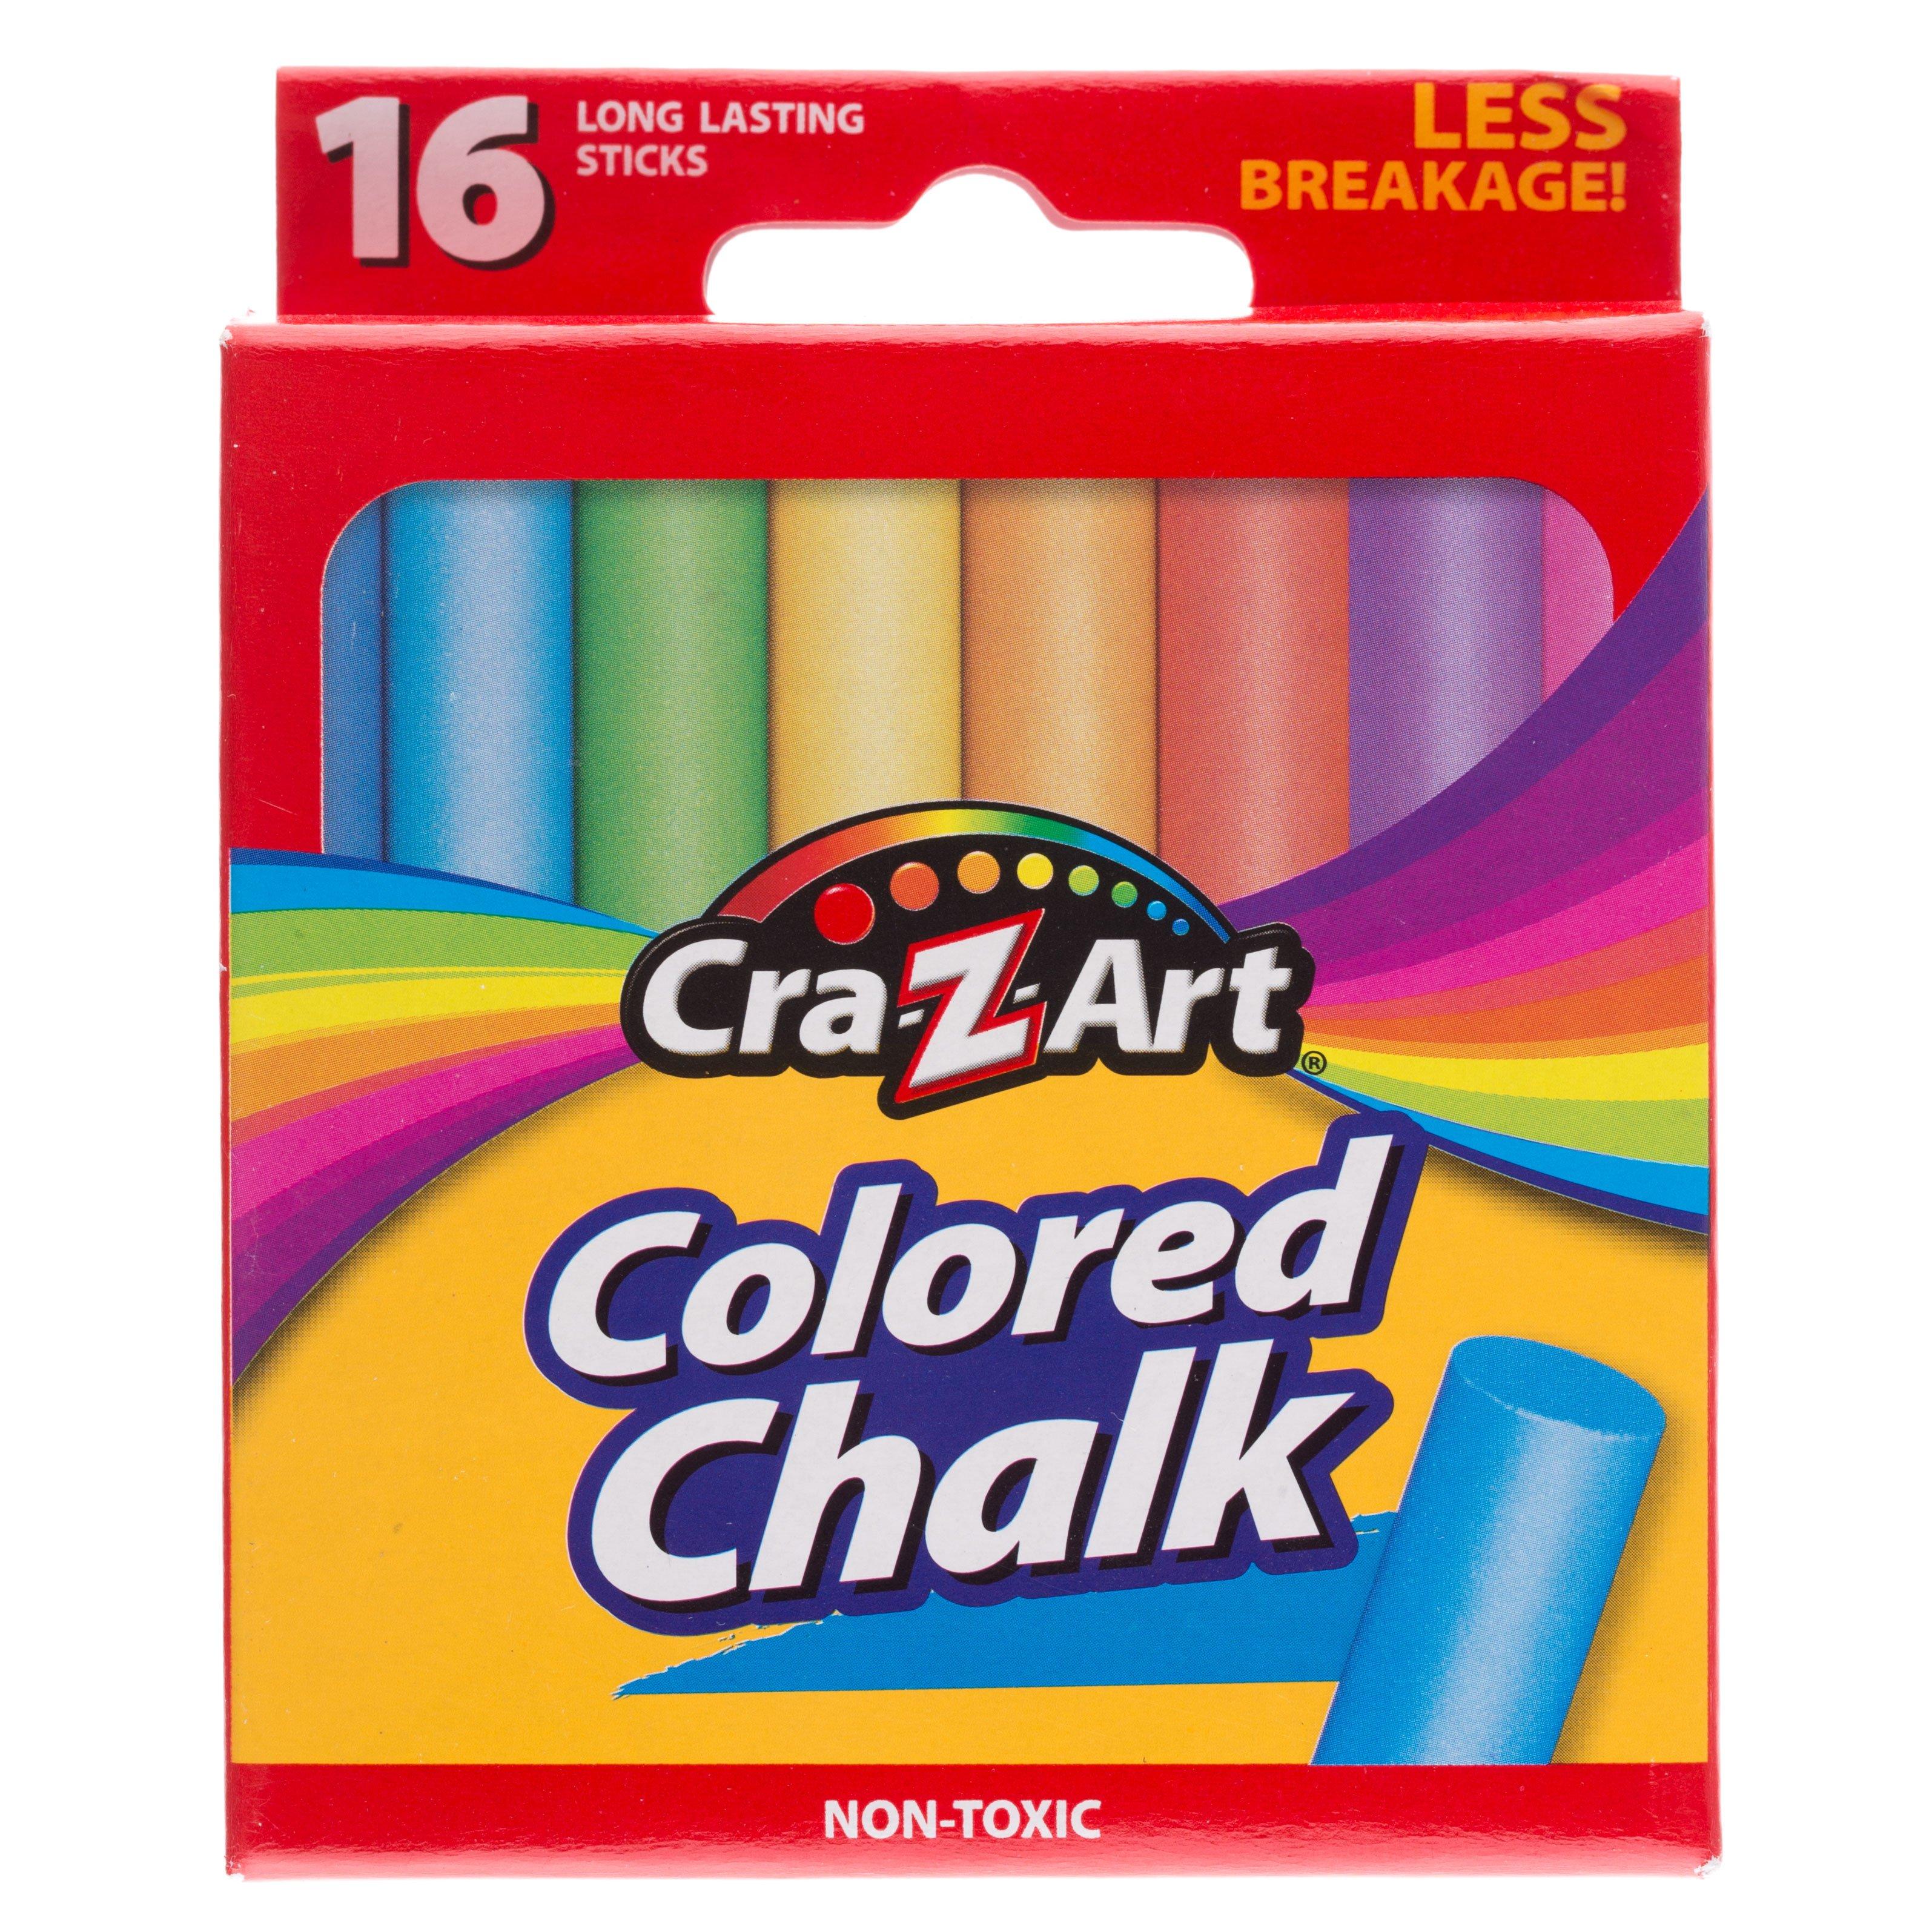 Crayola Metallic Colored Pencils - 8 Piece Set, Hobby Lobby